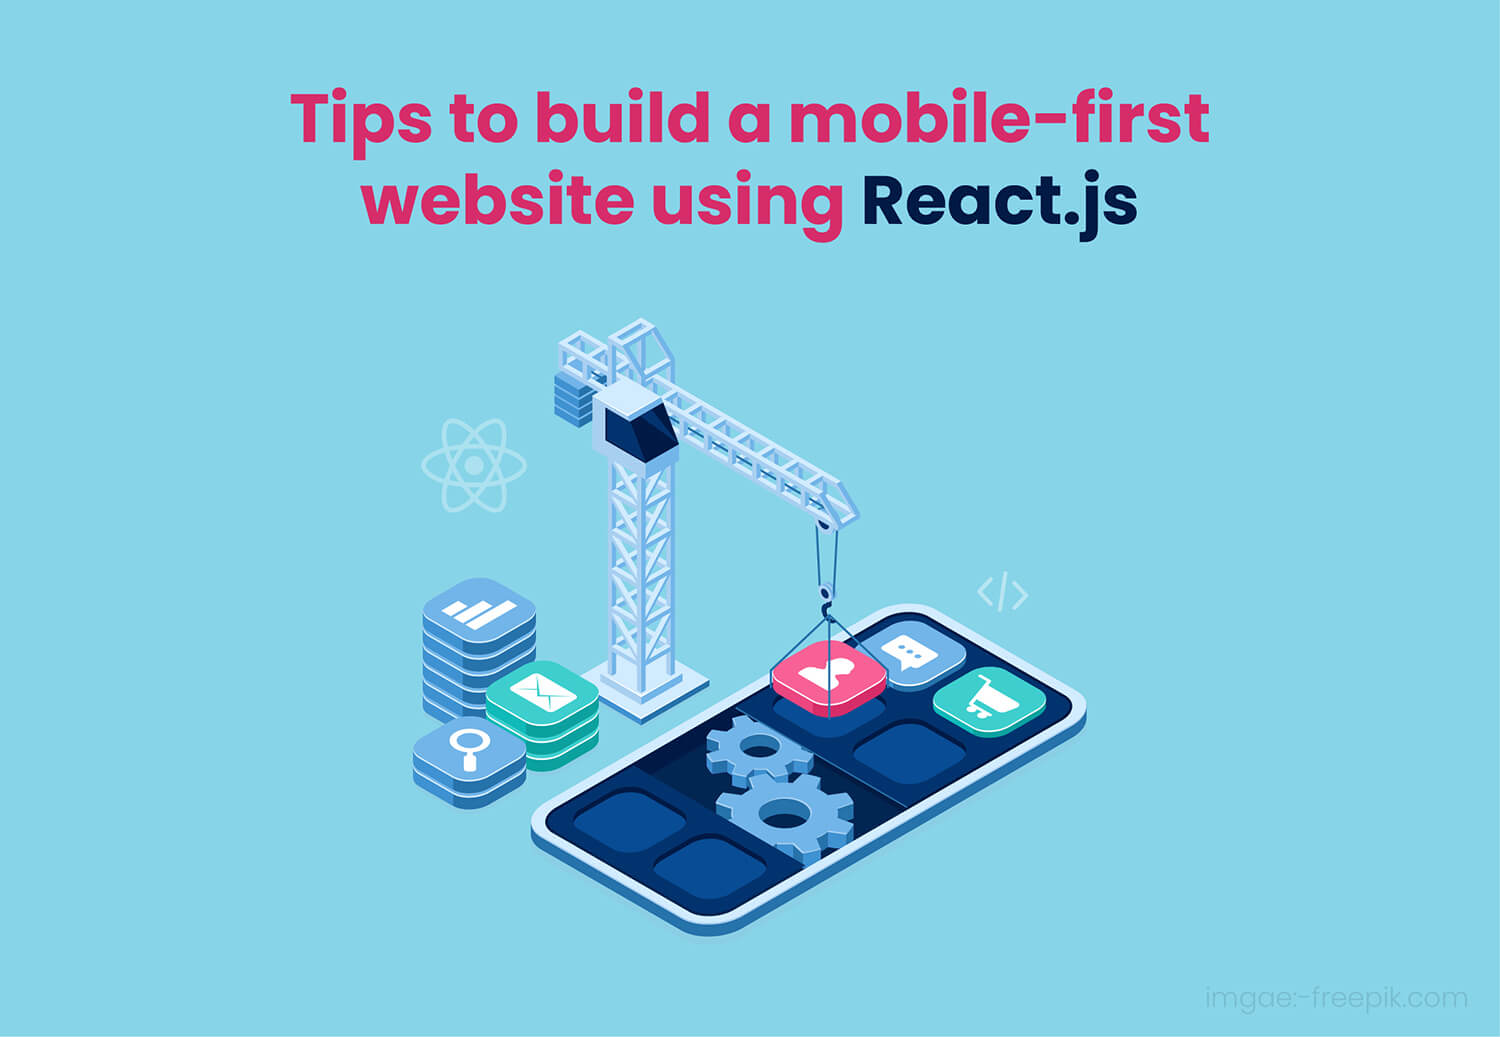 Tips for mobile-first website development using React.js